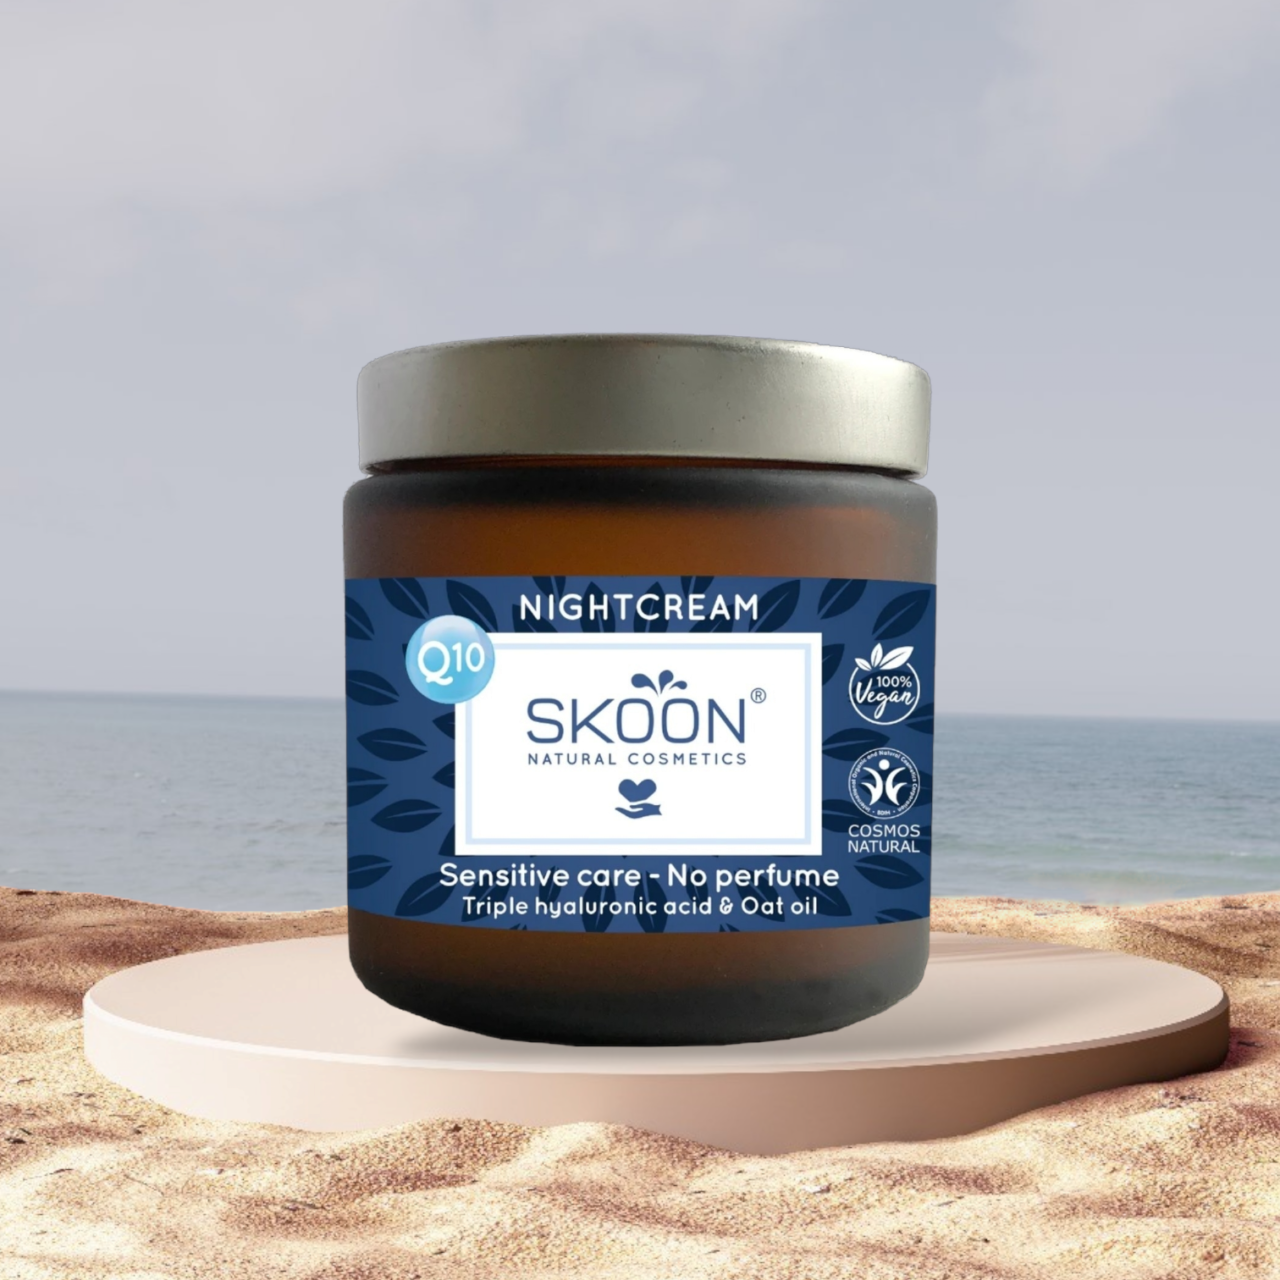 En Økologisk natcreme-krukke gløder på en fløjlsblød strand og giver helbredelse og fremmer naturlig velvære.